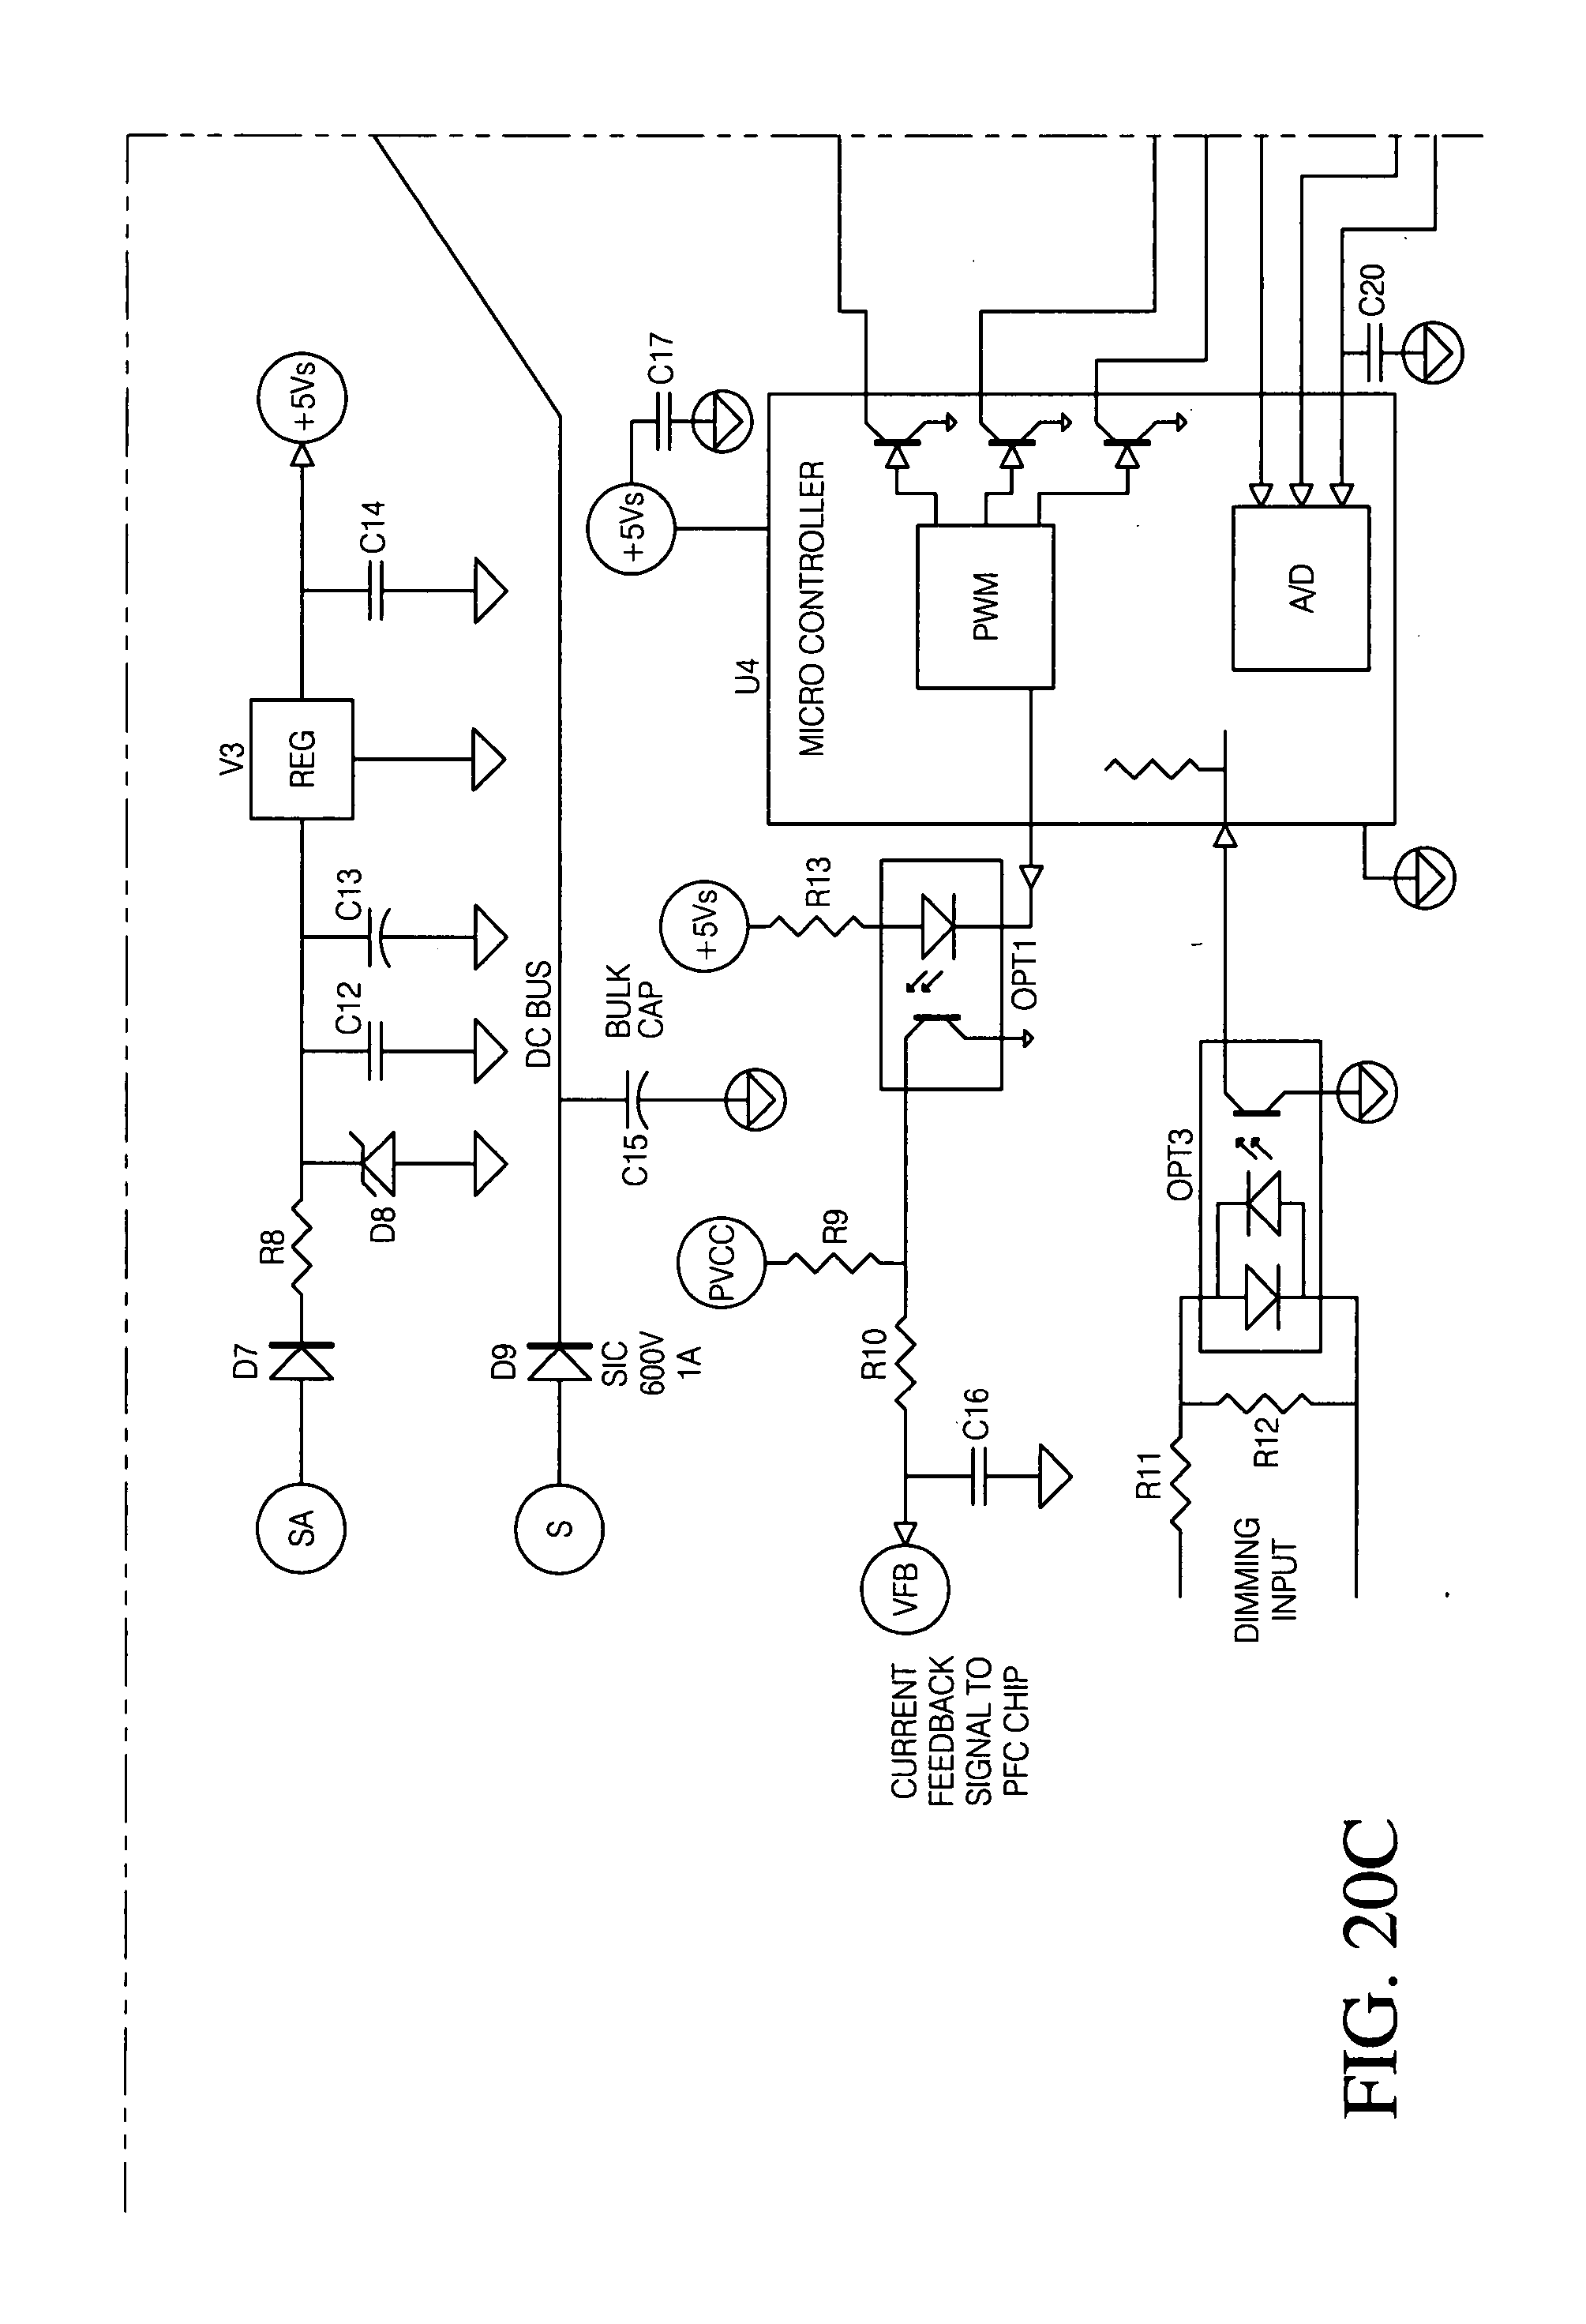 Nlight Wiring Diagram - Gota Wiring Diagram •